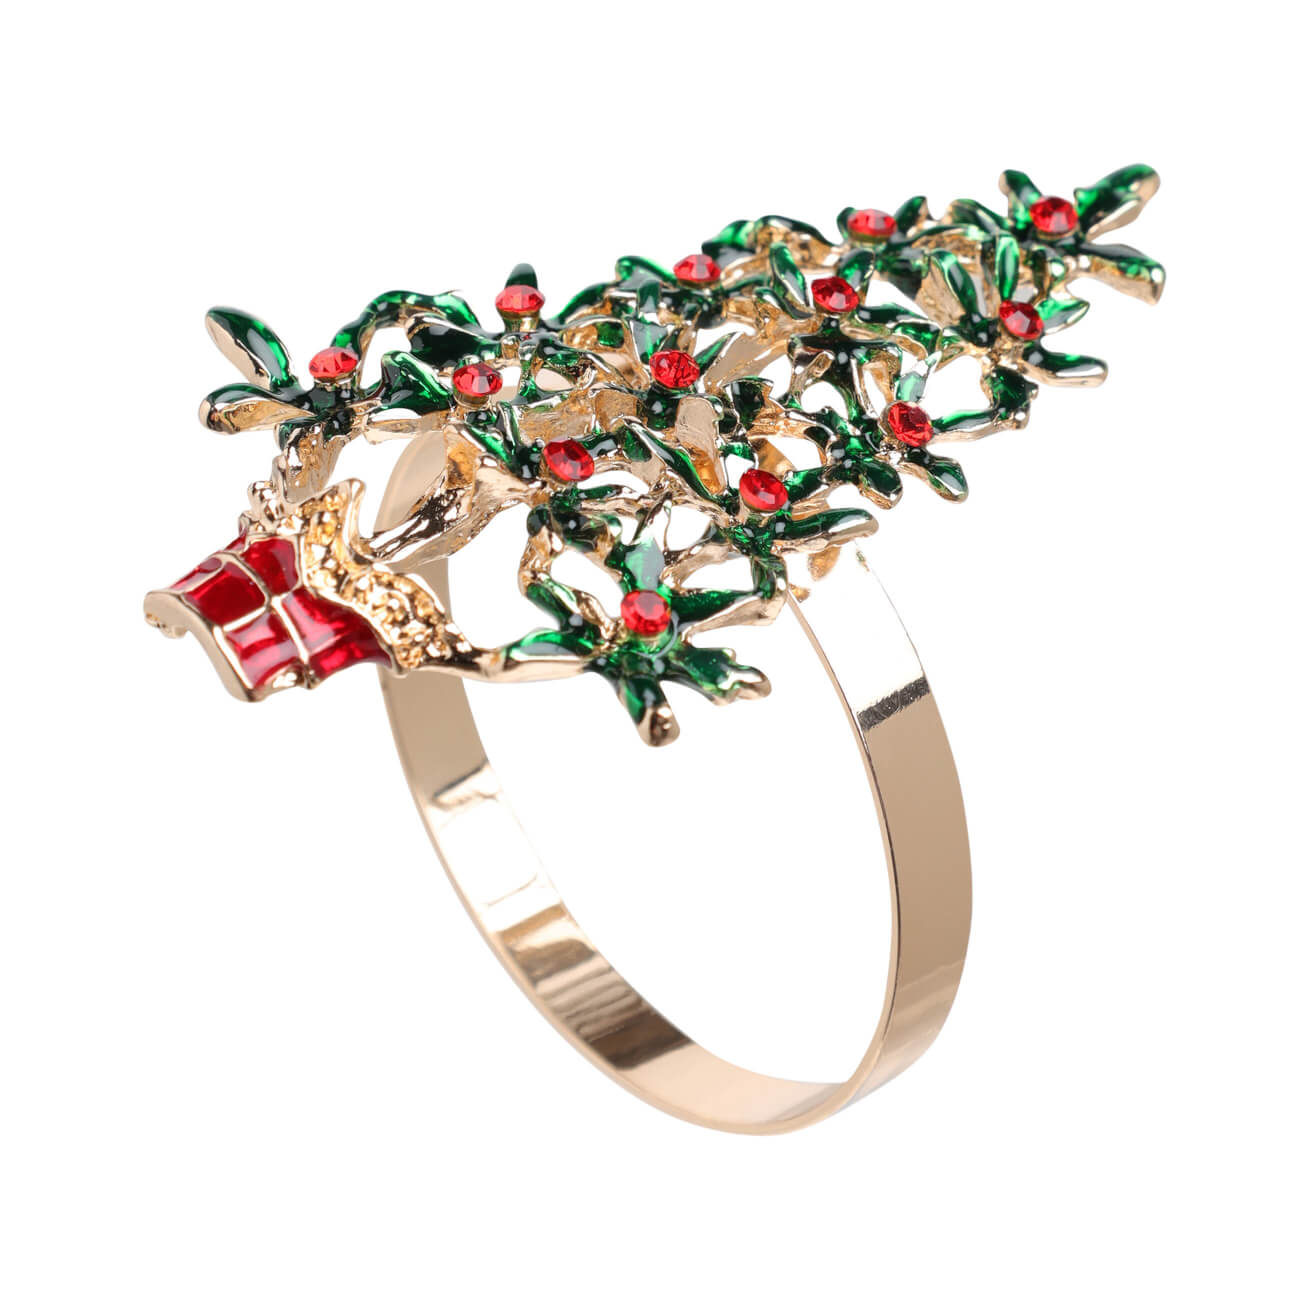 Кольцо для салфеток, 6 см, металл, золотисто-зеленое, Новогодняя елка, Christmas classic - фото 1